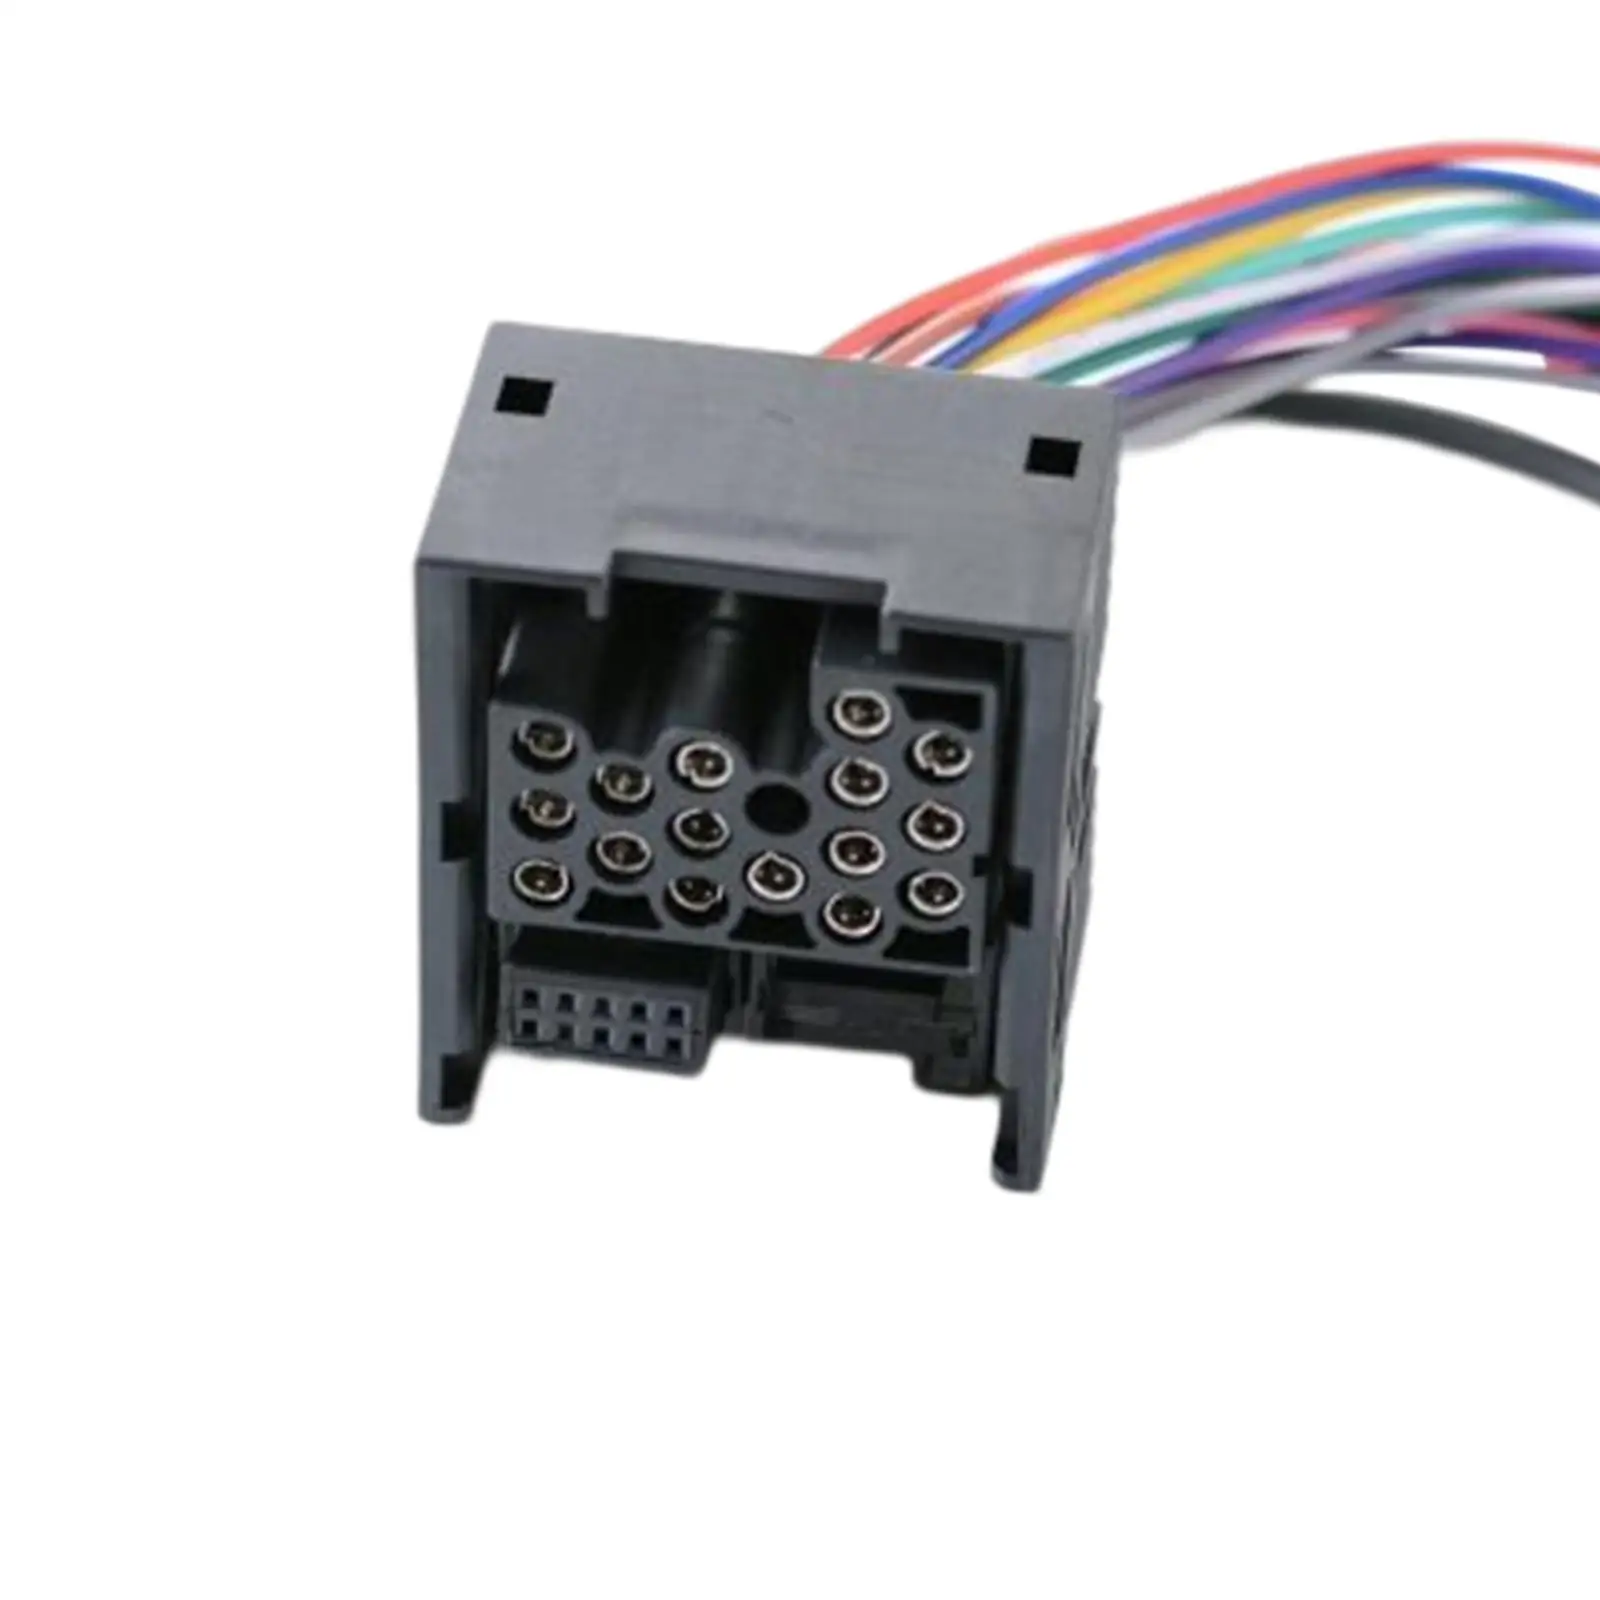 Car AUX Audio Cable Adaptor Repair Parts for BMW E46 3 Series 323Ci